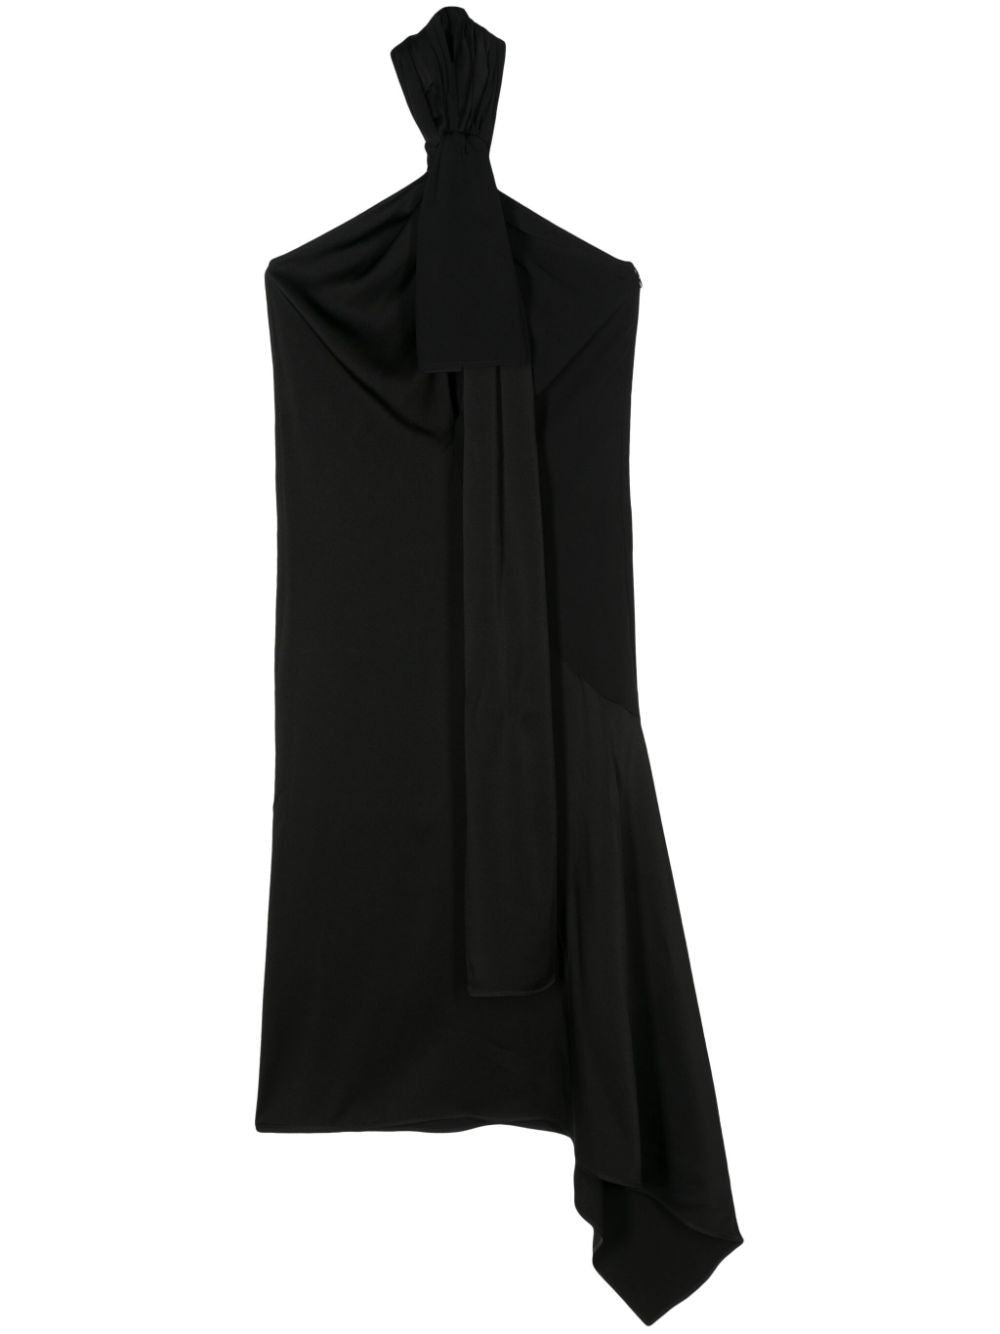 Black V-Neck Sleeveless Dress for Women by GIVENCHY